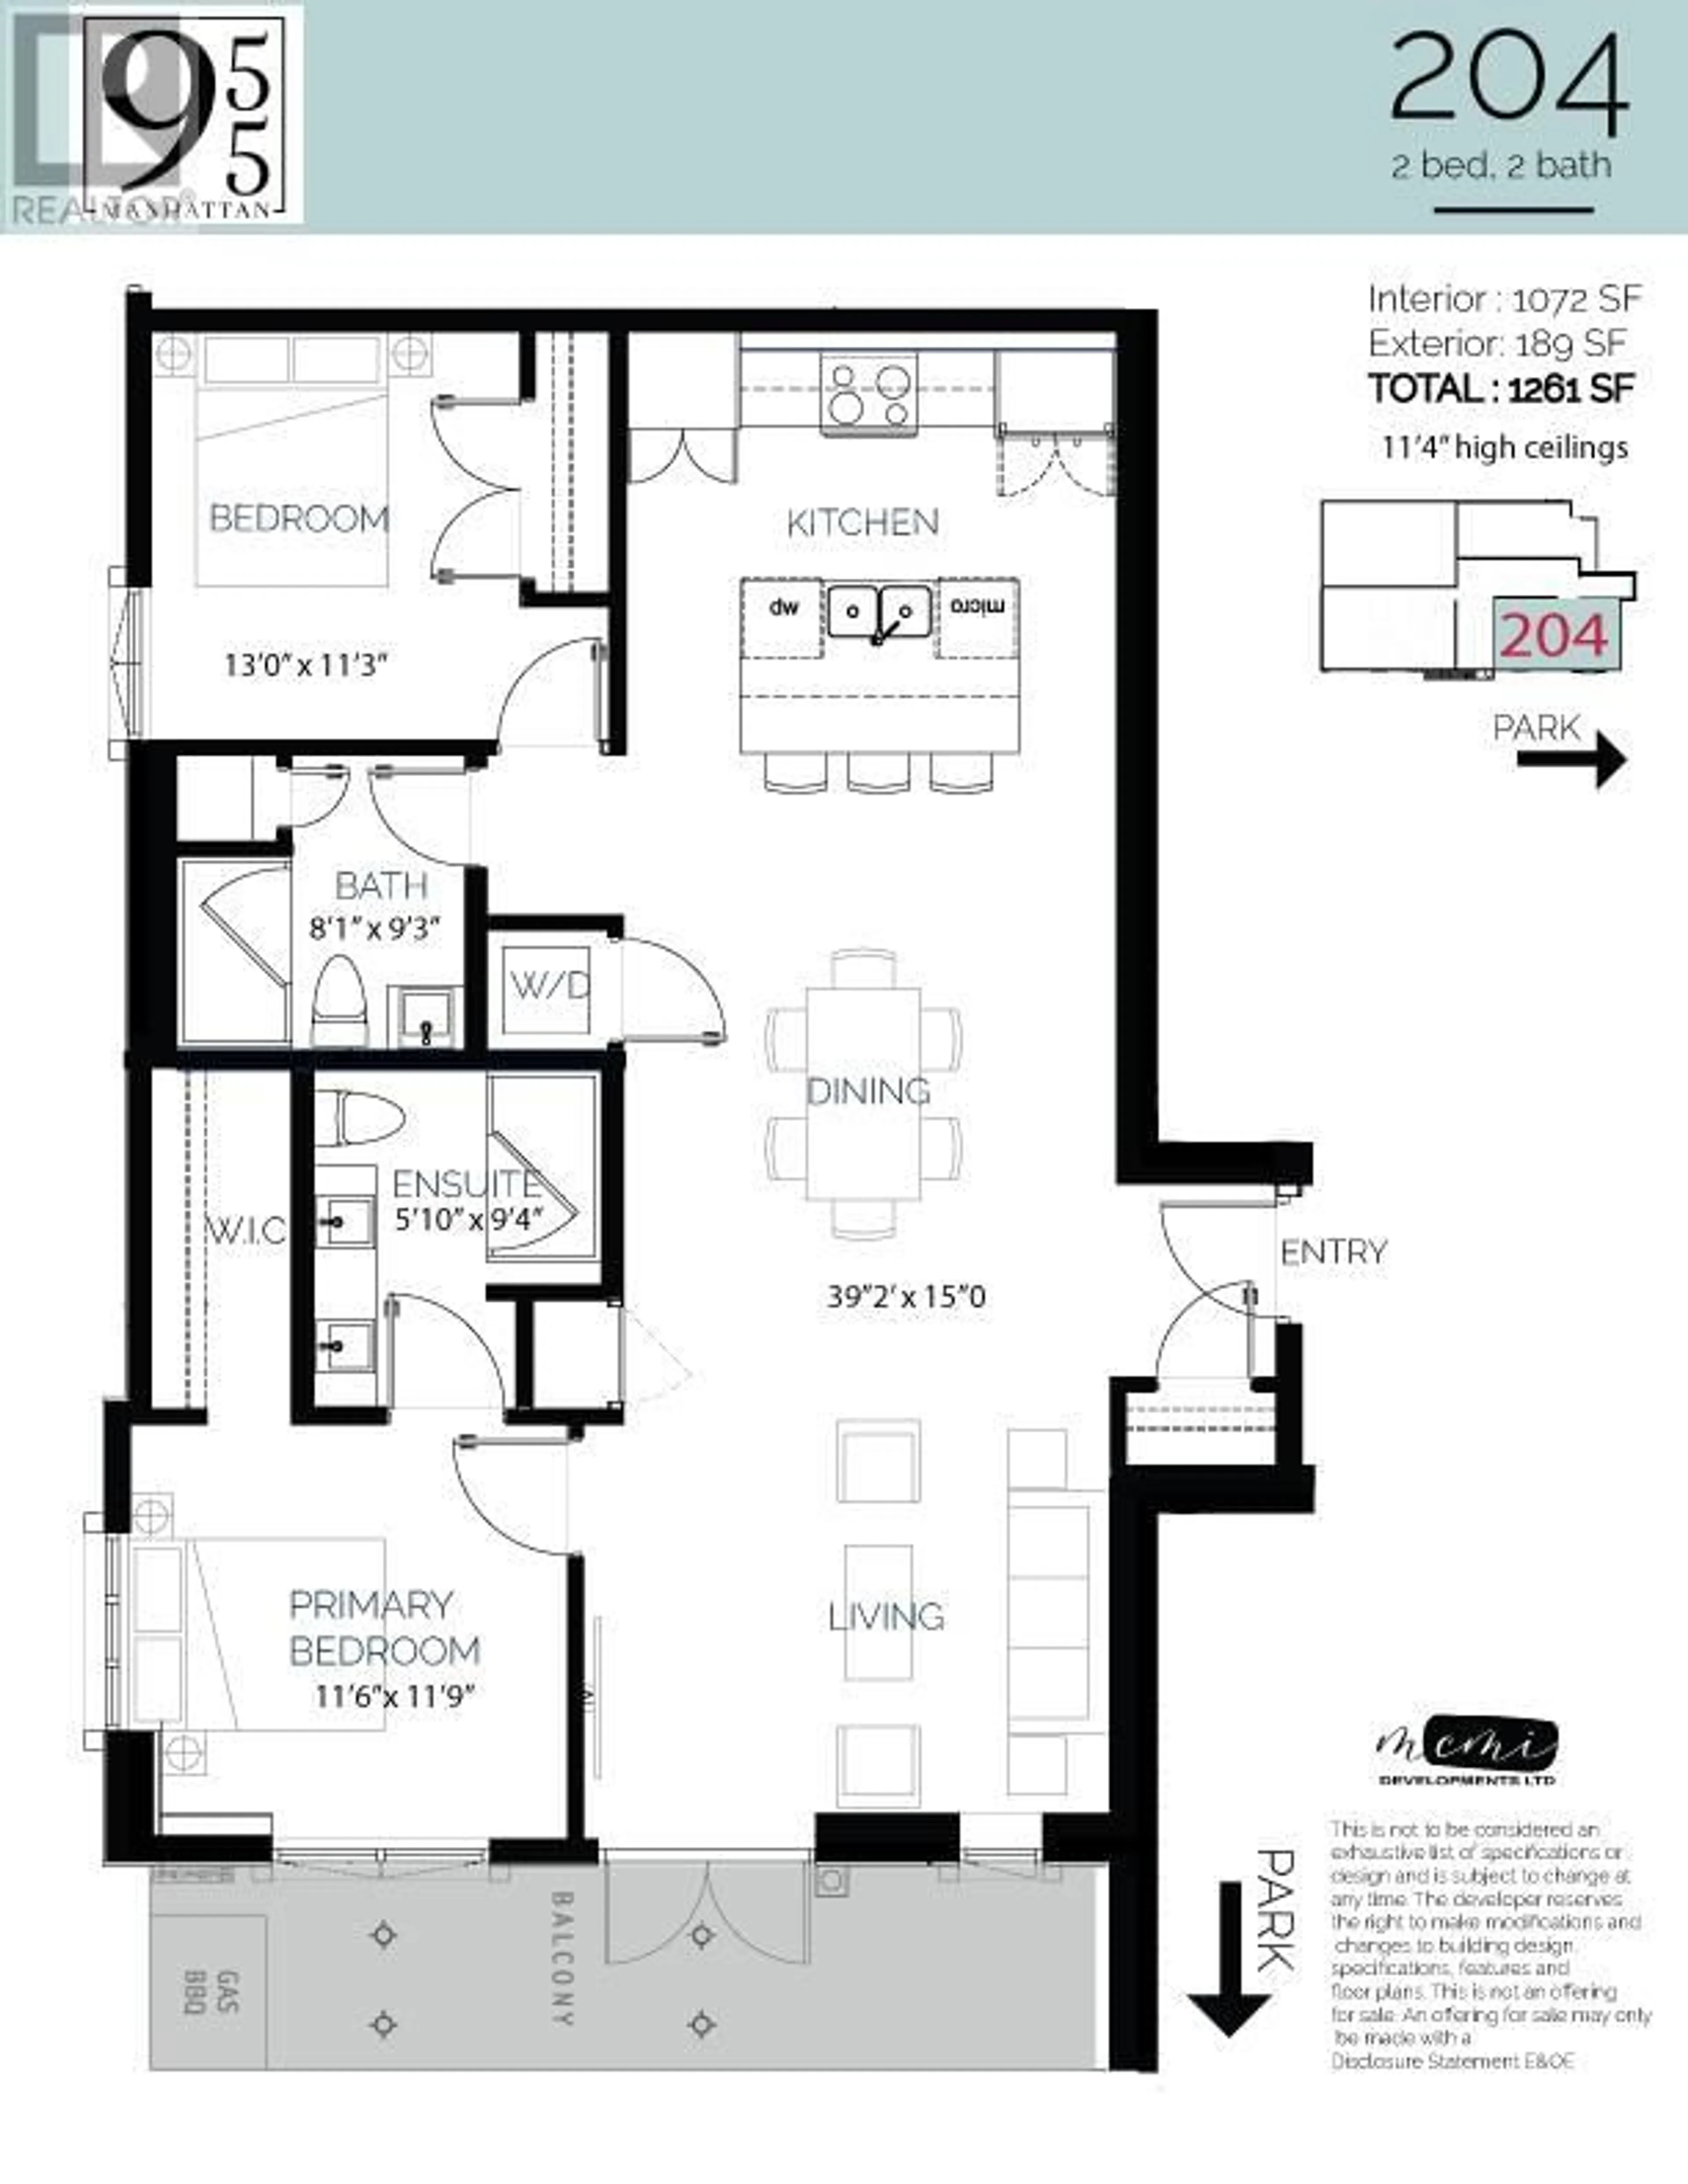 Floor plan for 955 Manhattan Drive Unit# 204, Kelowna British Columbia V1Y1H7